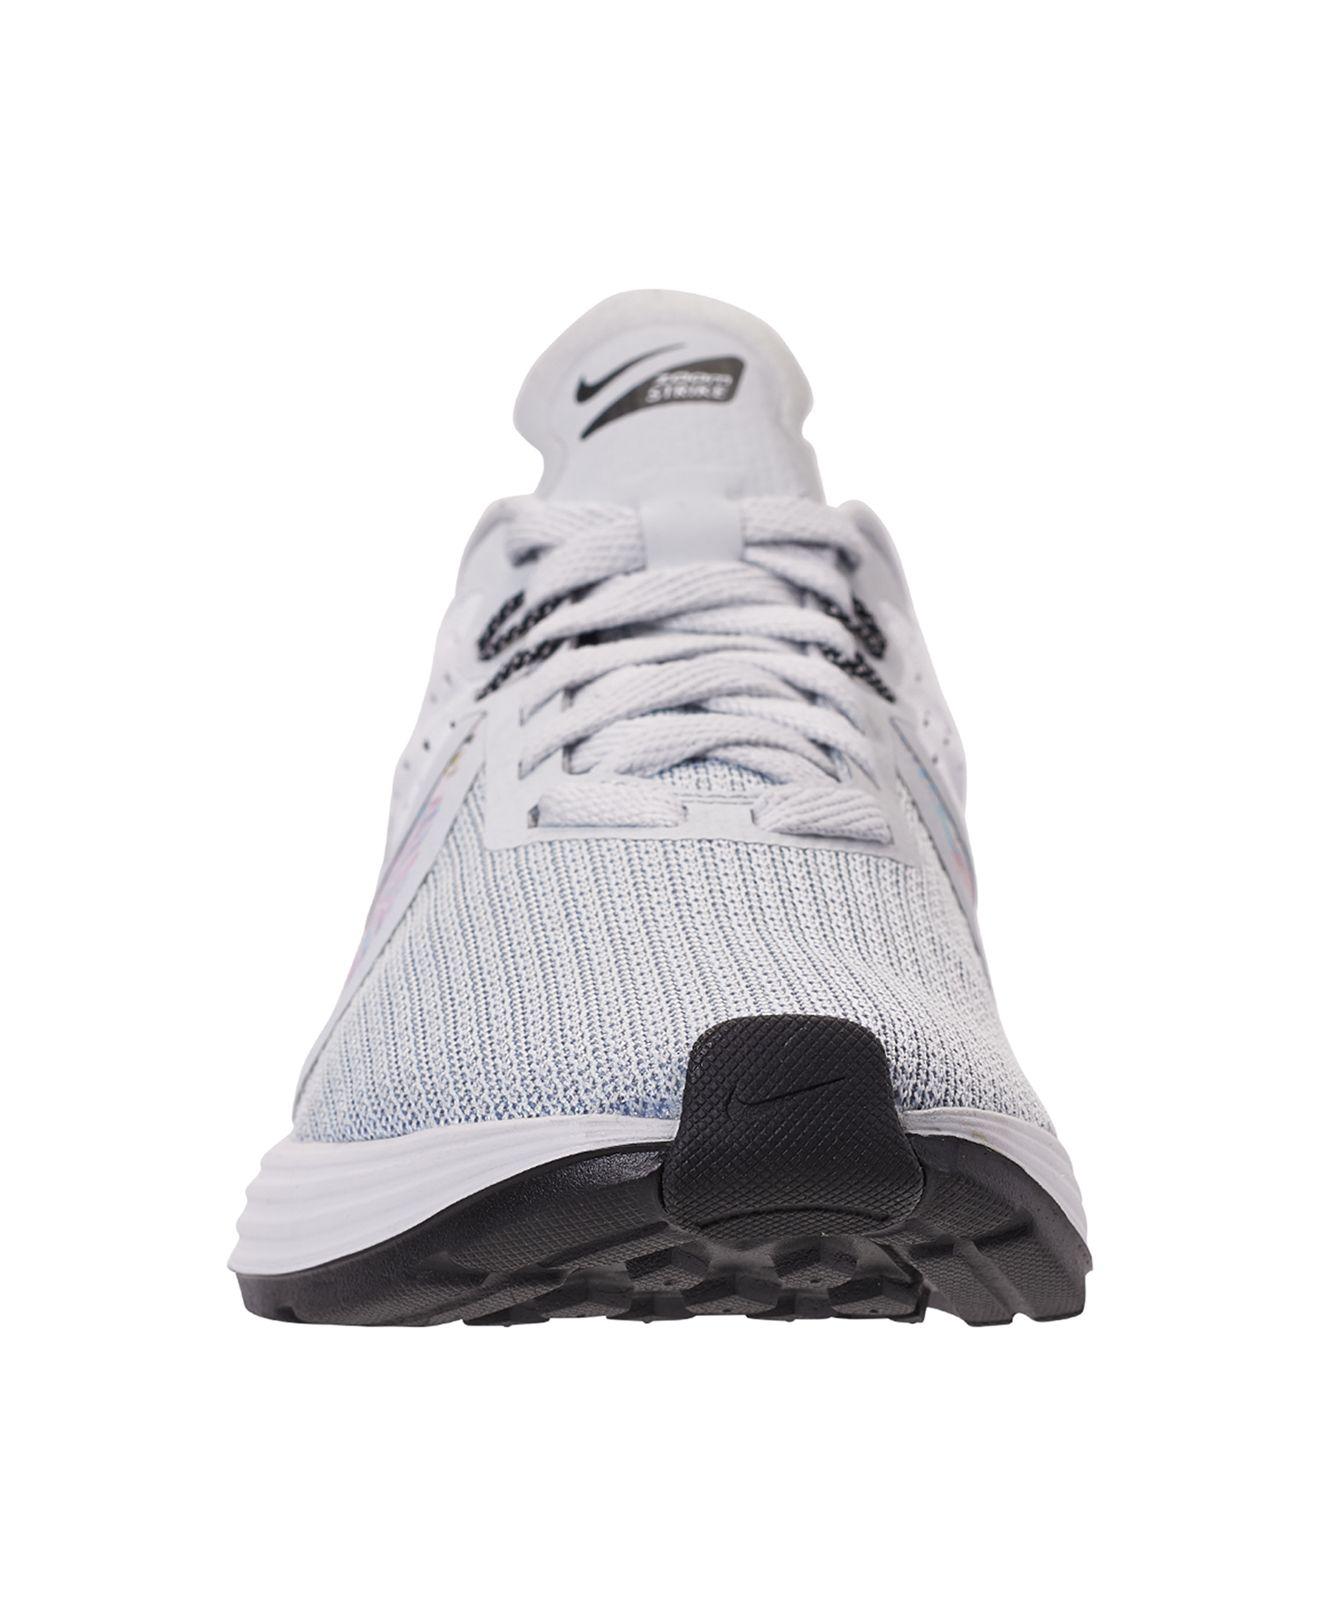 Nike Synthetic Zoom Strike 2 Mesh Running Shoe - Lyst